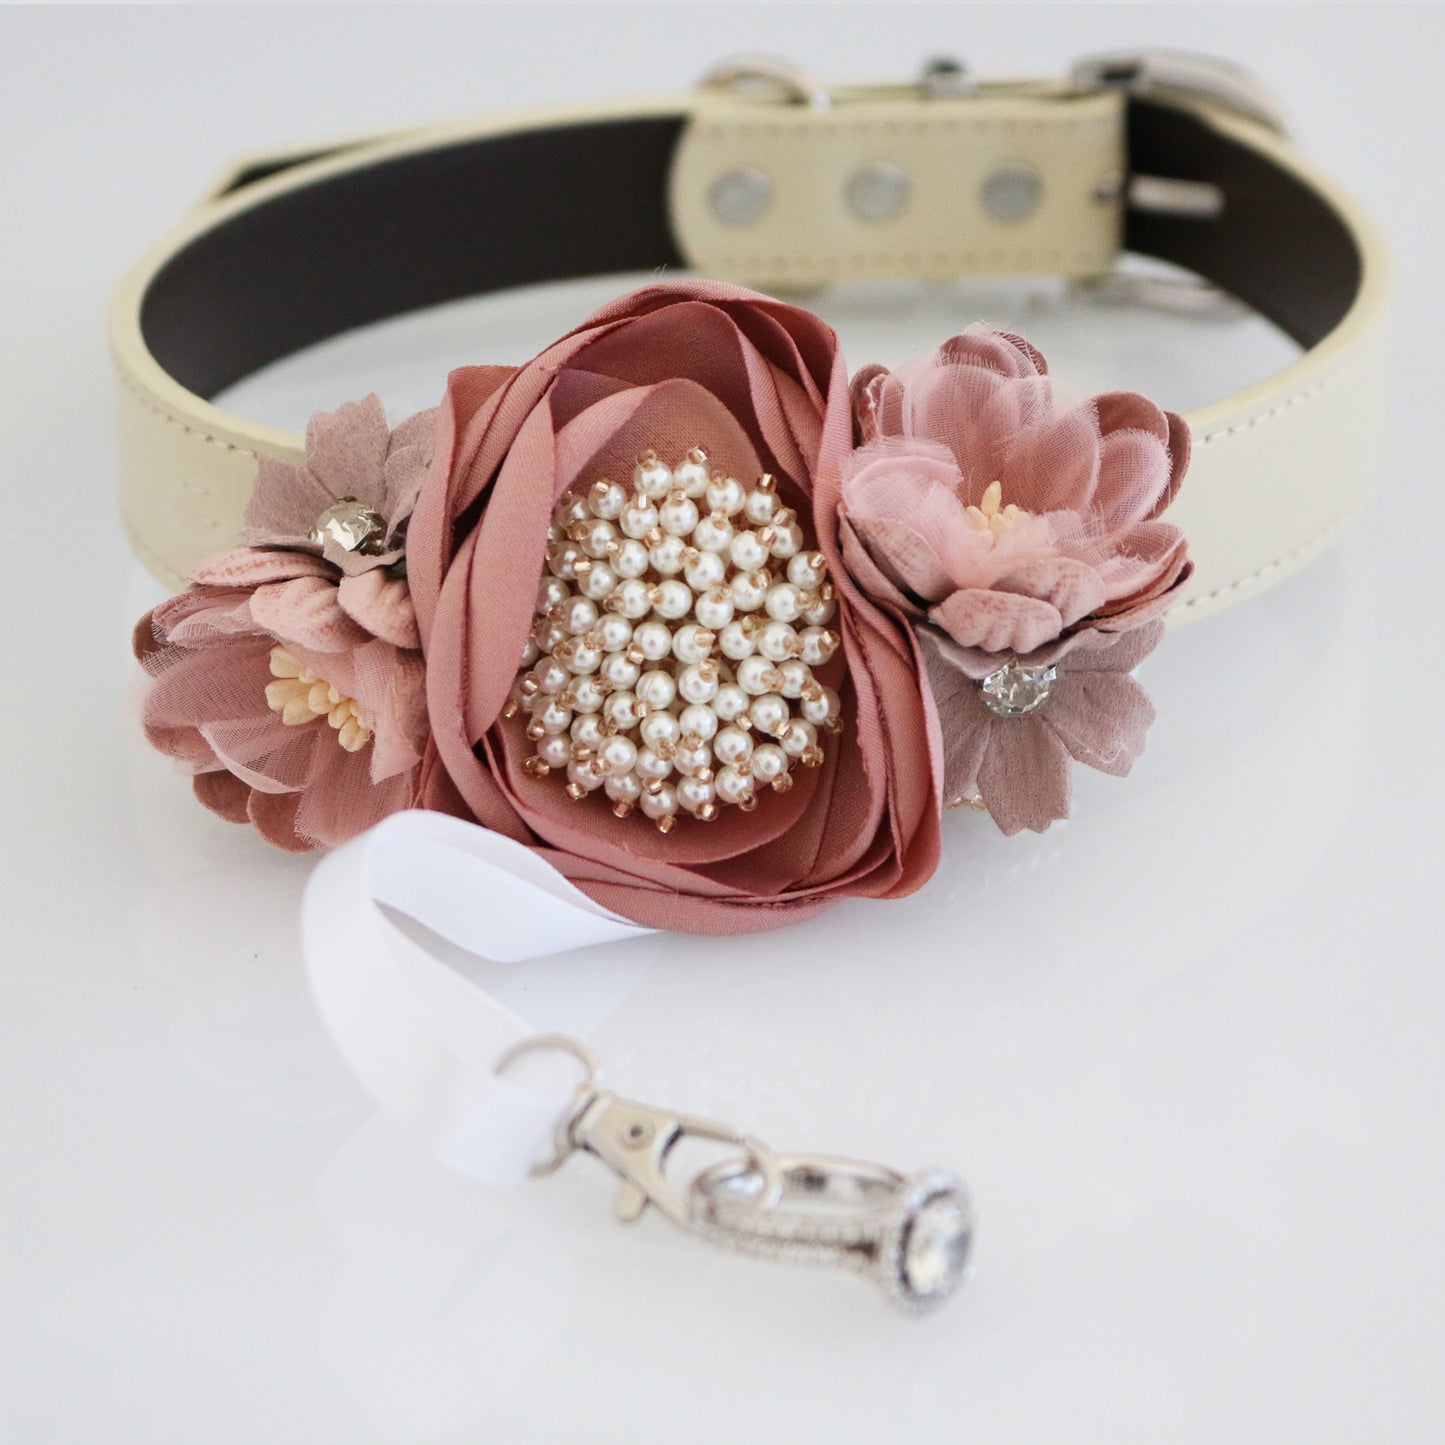 Dusty pink pearl beaded handmade flower collar, Dog ring bearer ring bearer handmade XS XXL collar, Proposal country rustic dusty pink wedding